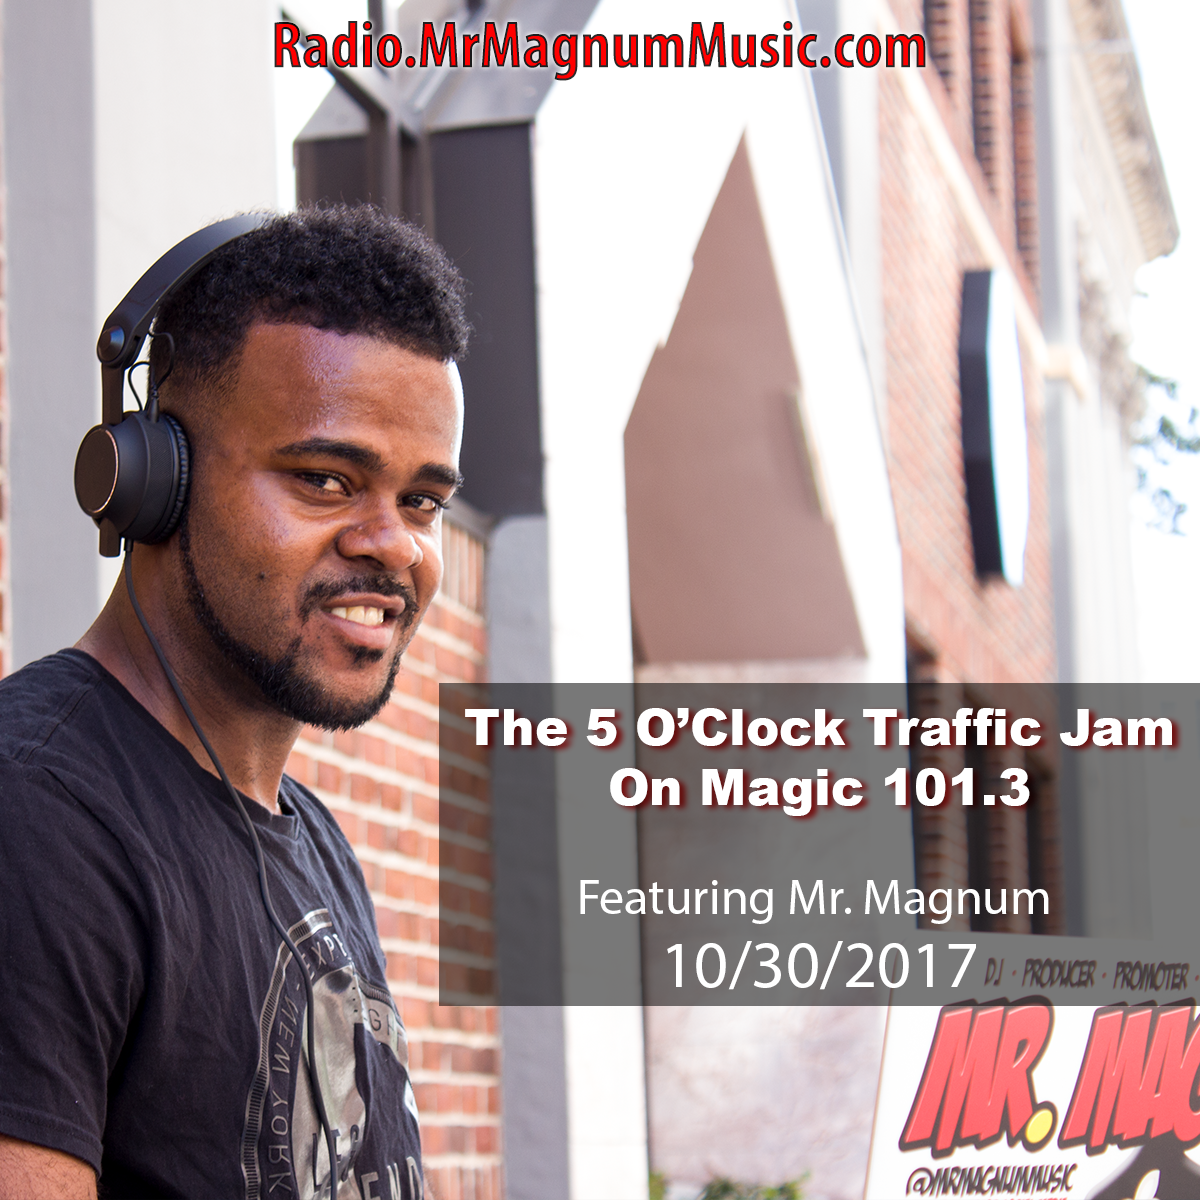 The 5 O'Clock Traffic Jam 20171030 featuring Gainesville's #1 DJ, Mr. Magnum on Magic 101.3